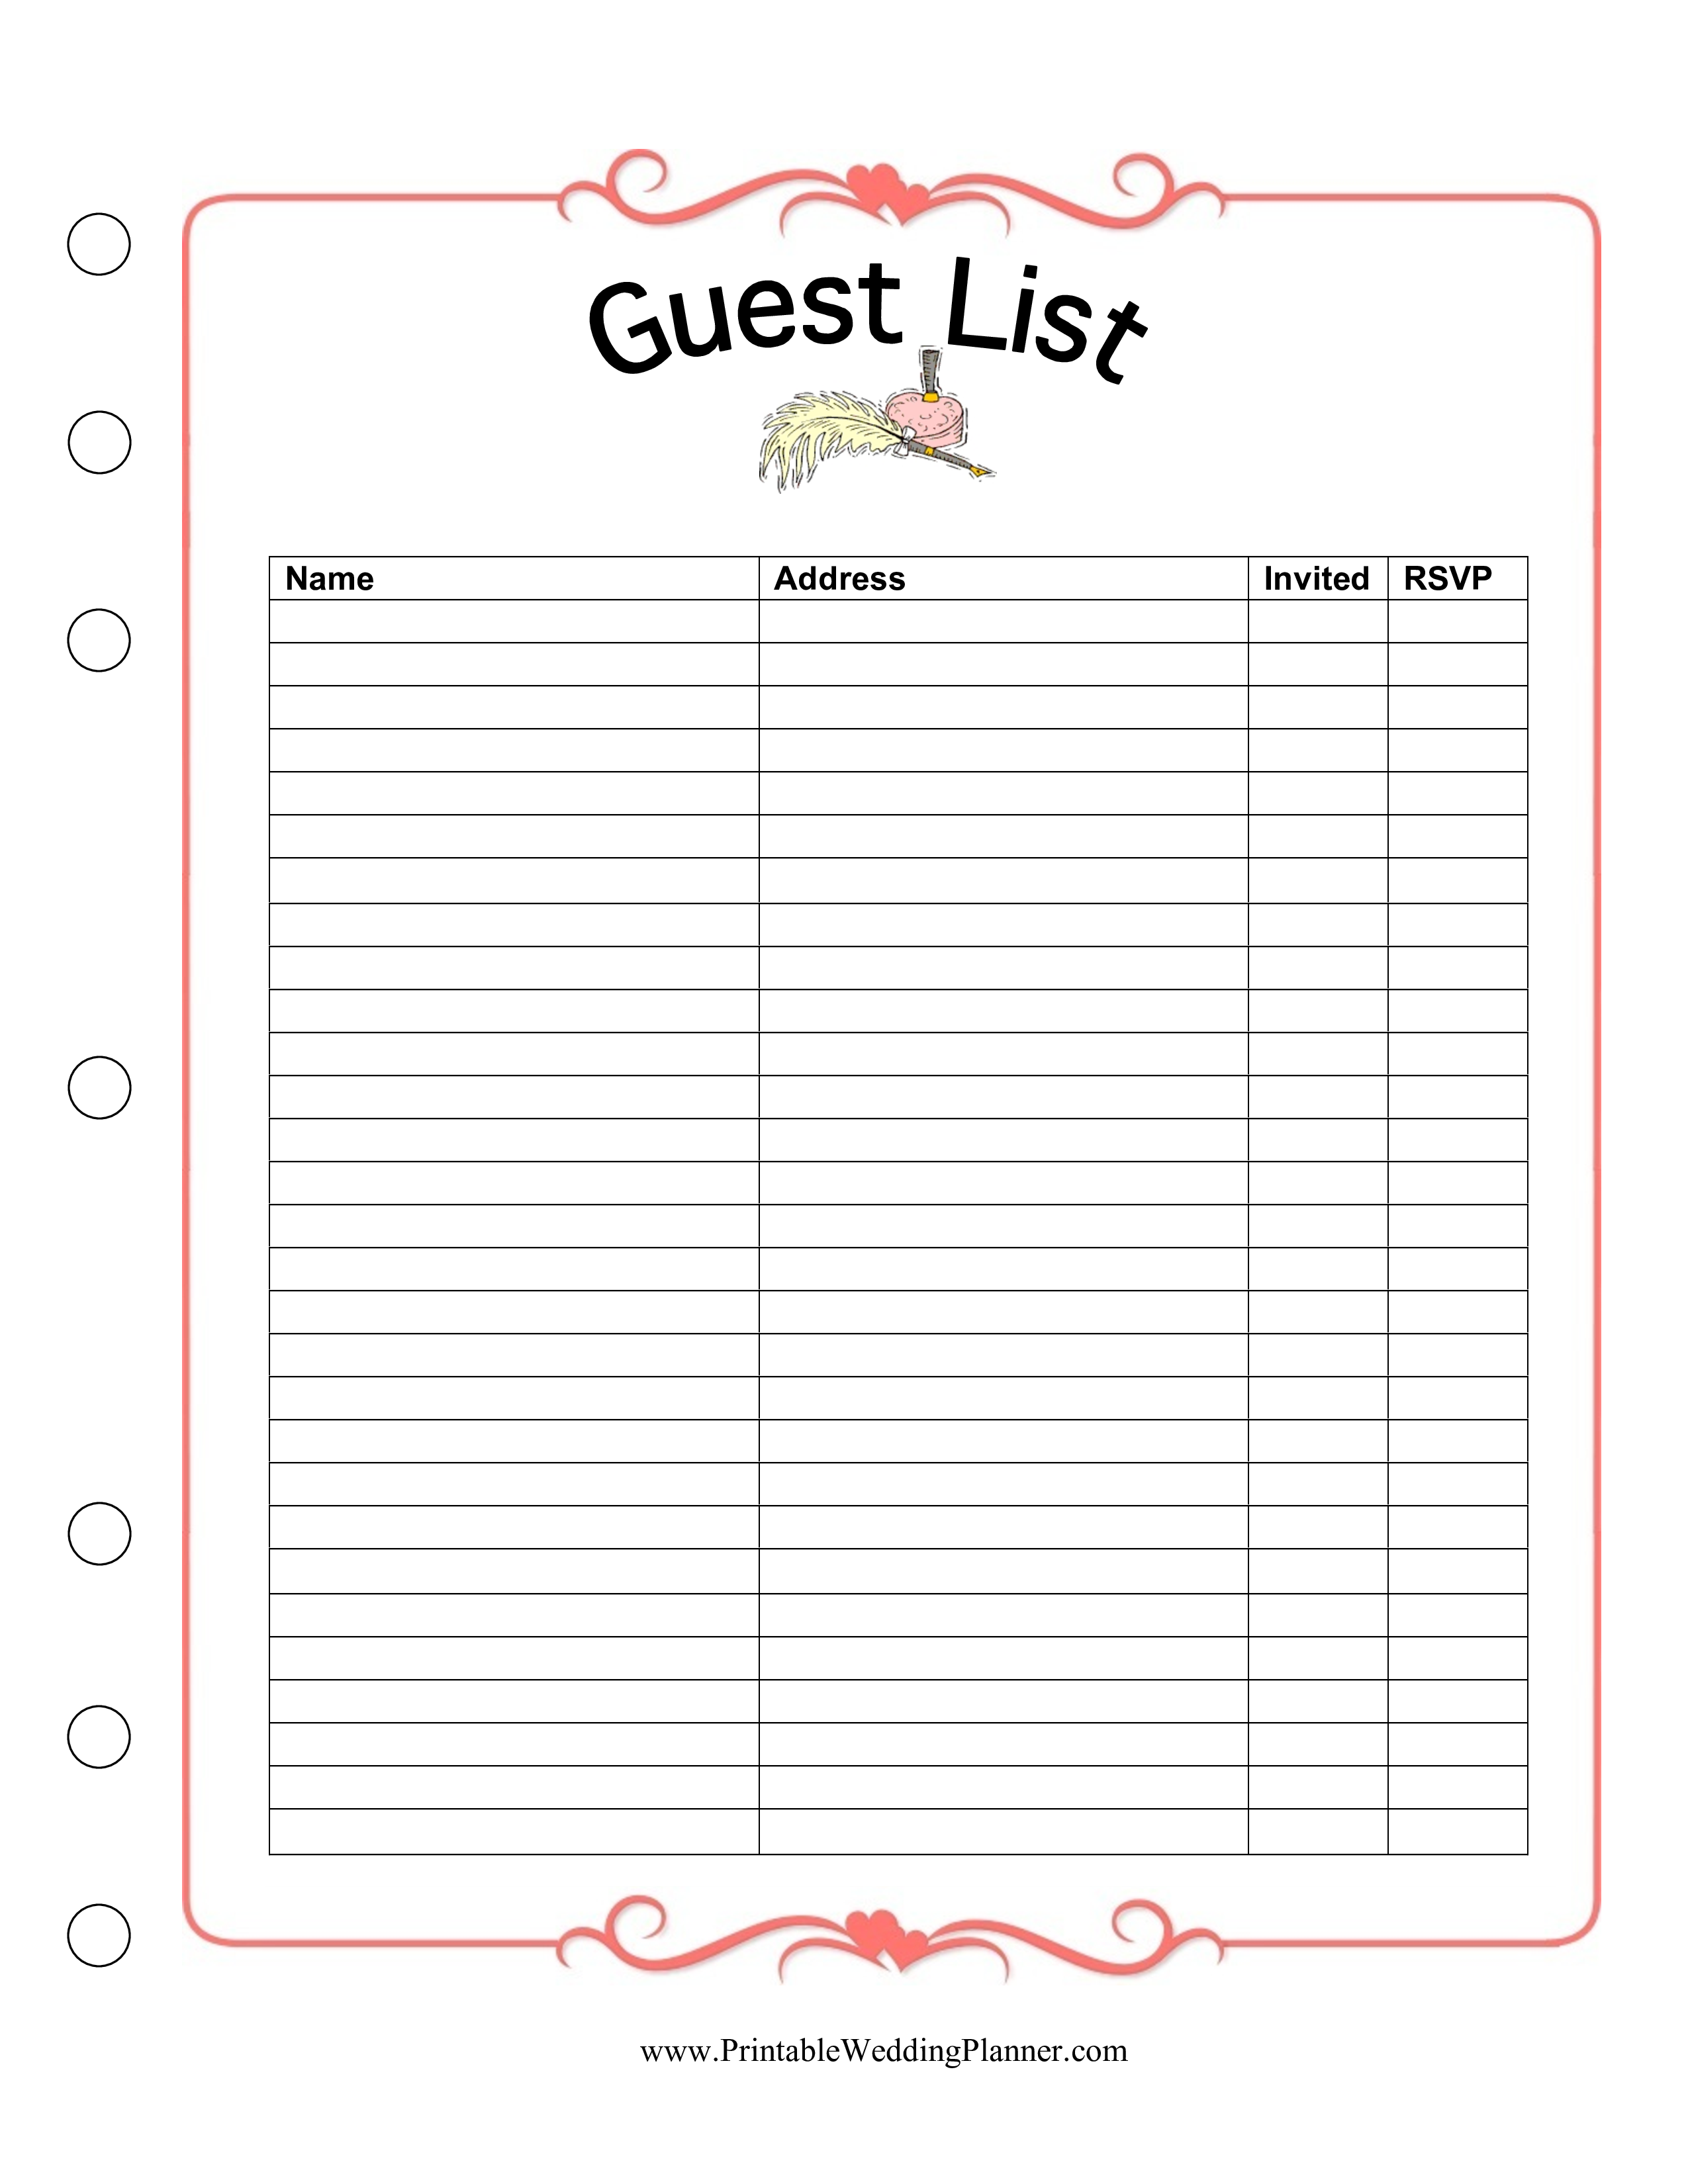 Wedding Guest List Spreadsheet - Do You Need An Effective | Wedding Guest List Worksheet Printable